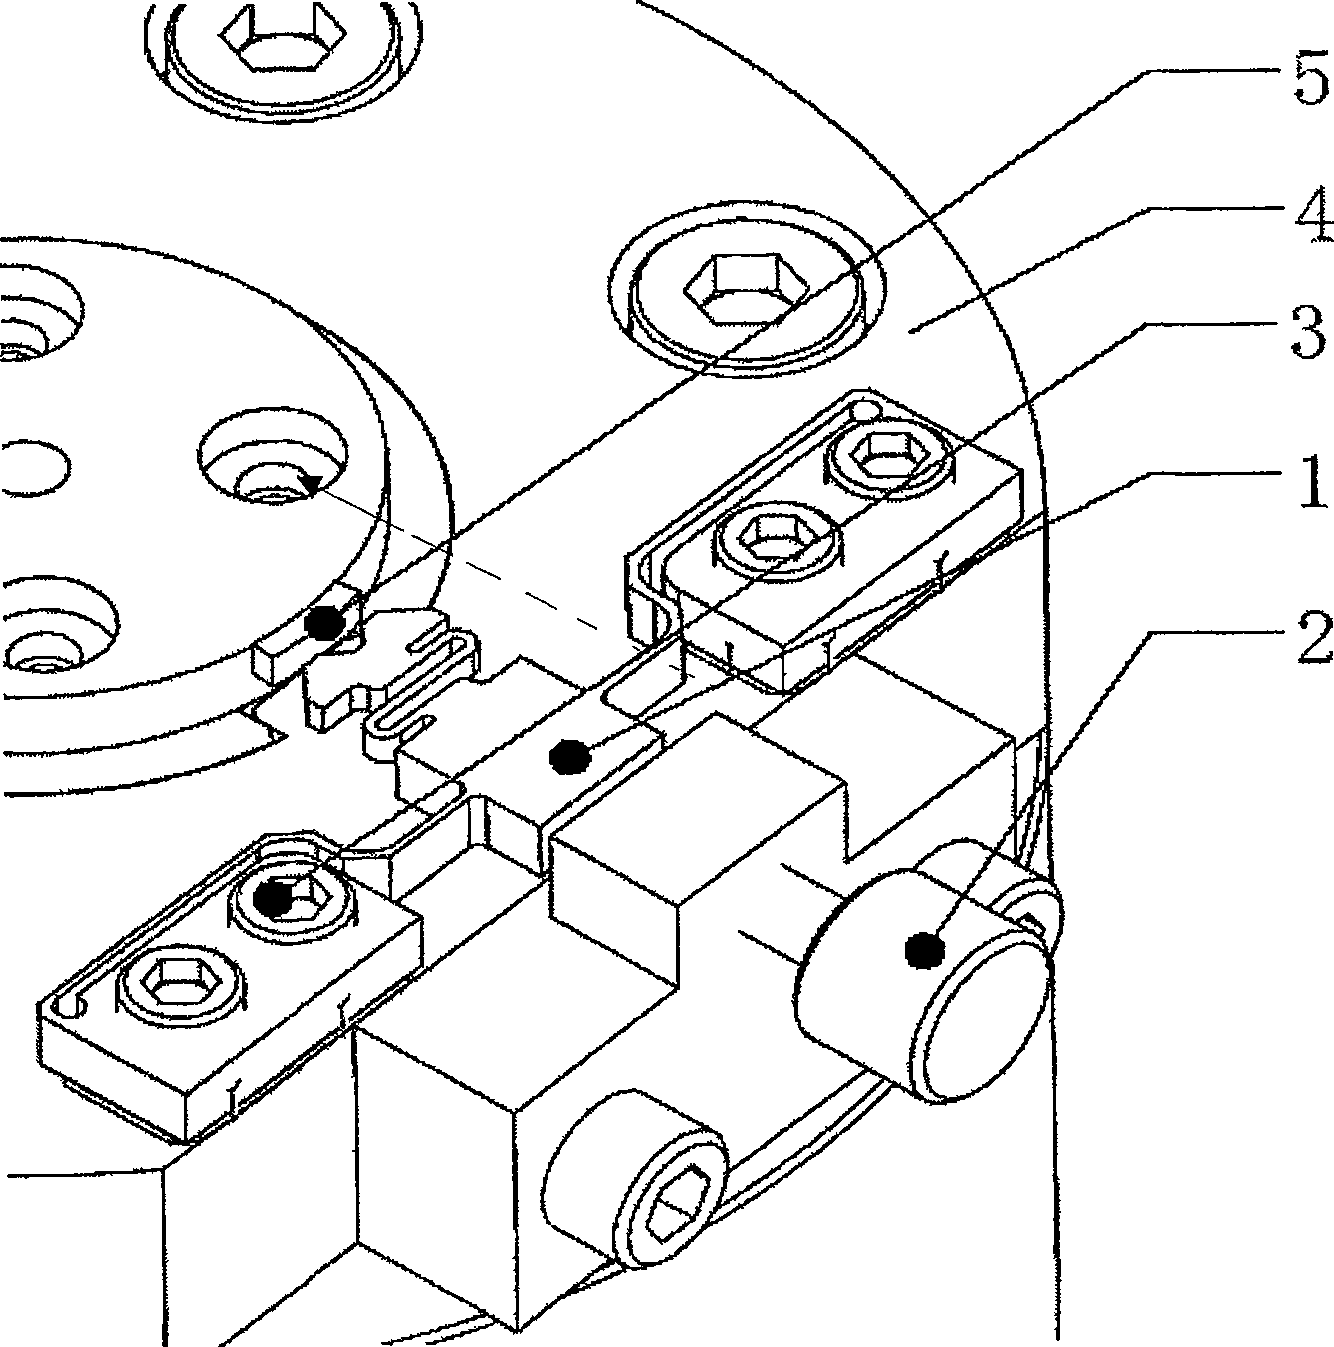 Micro flexible positioning locking mechanism